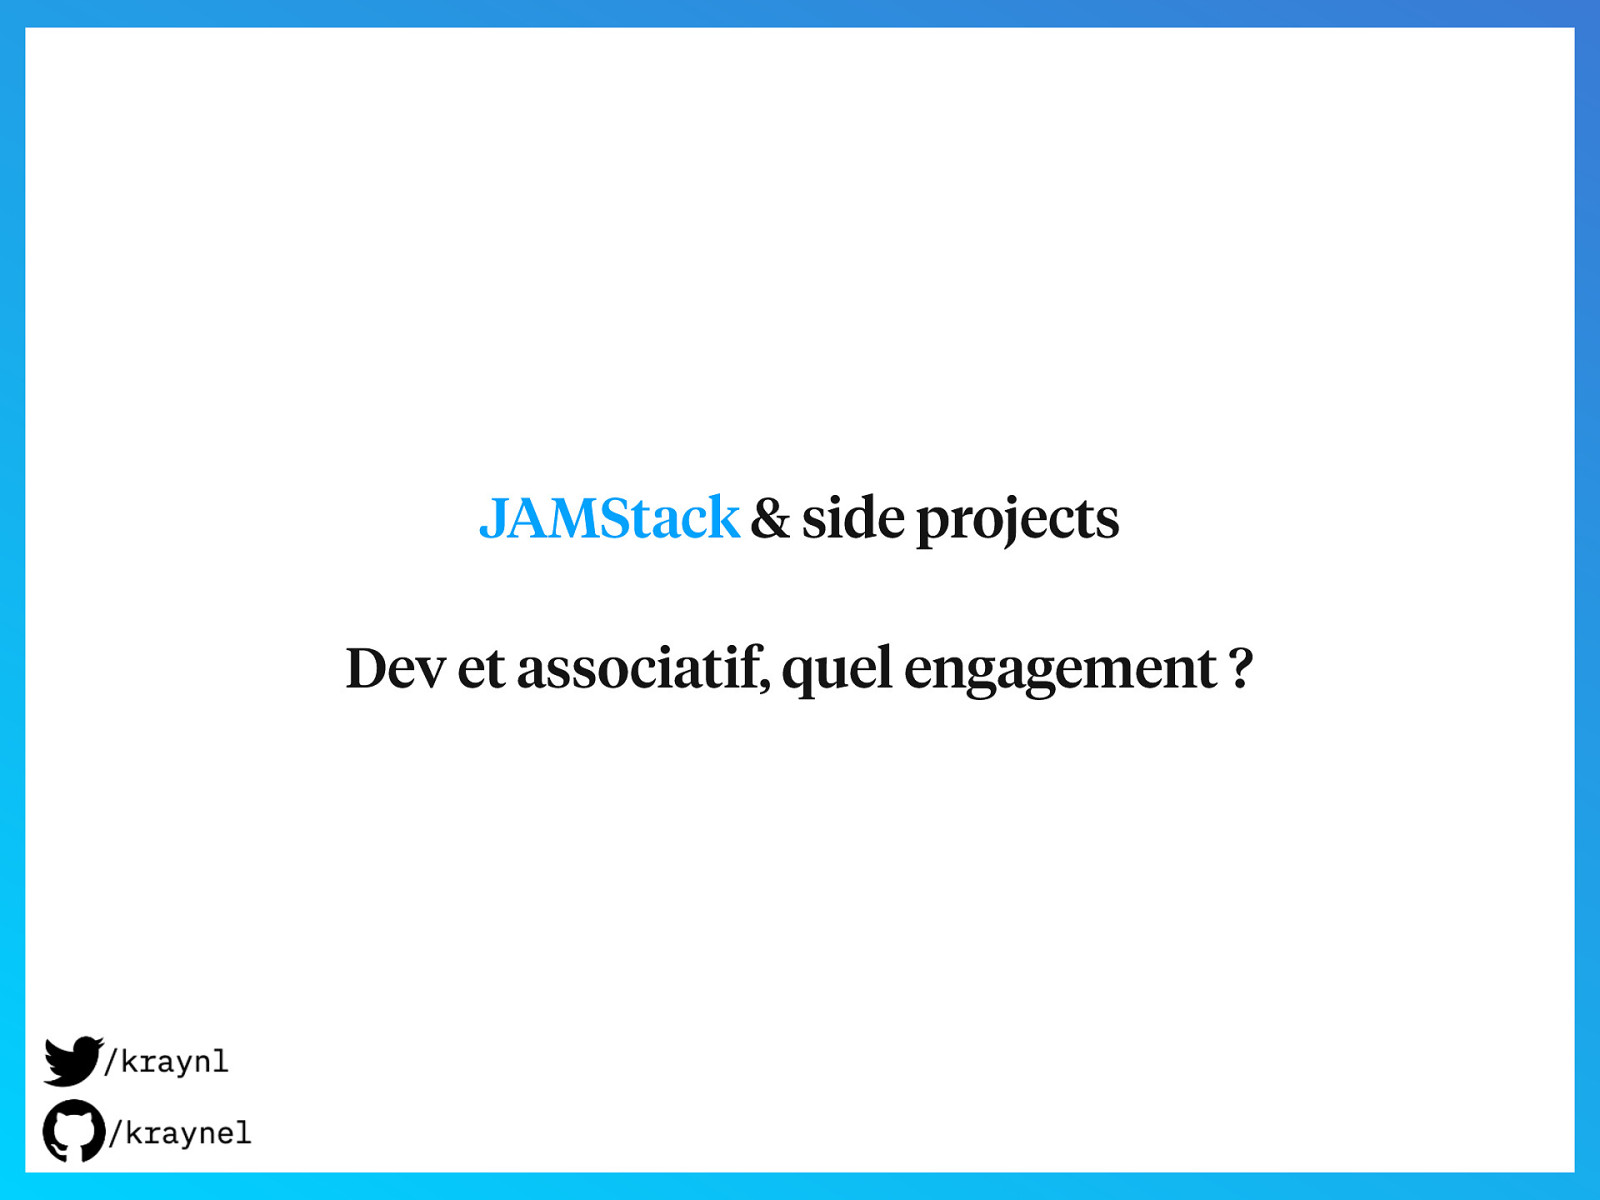 JAMStack & side projects - Dev et associatif, quel engagement ?